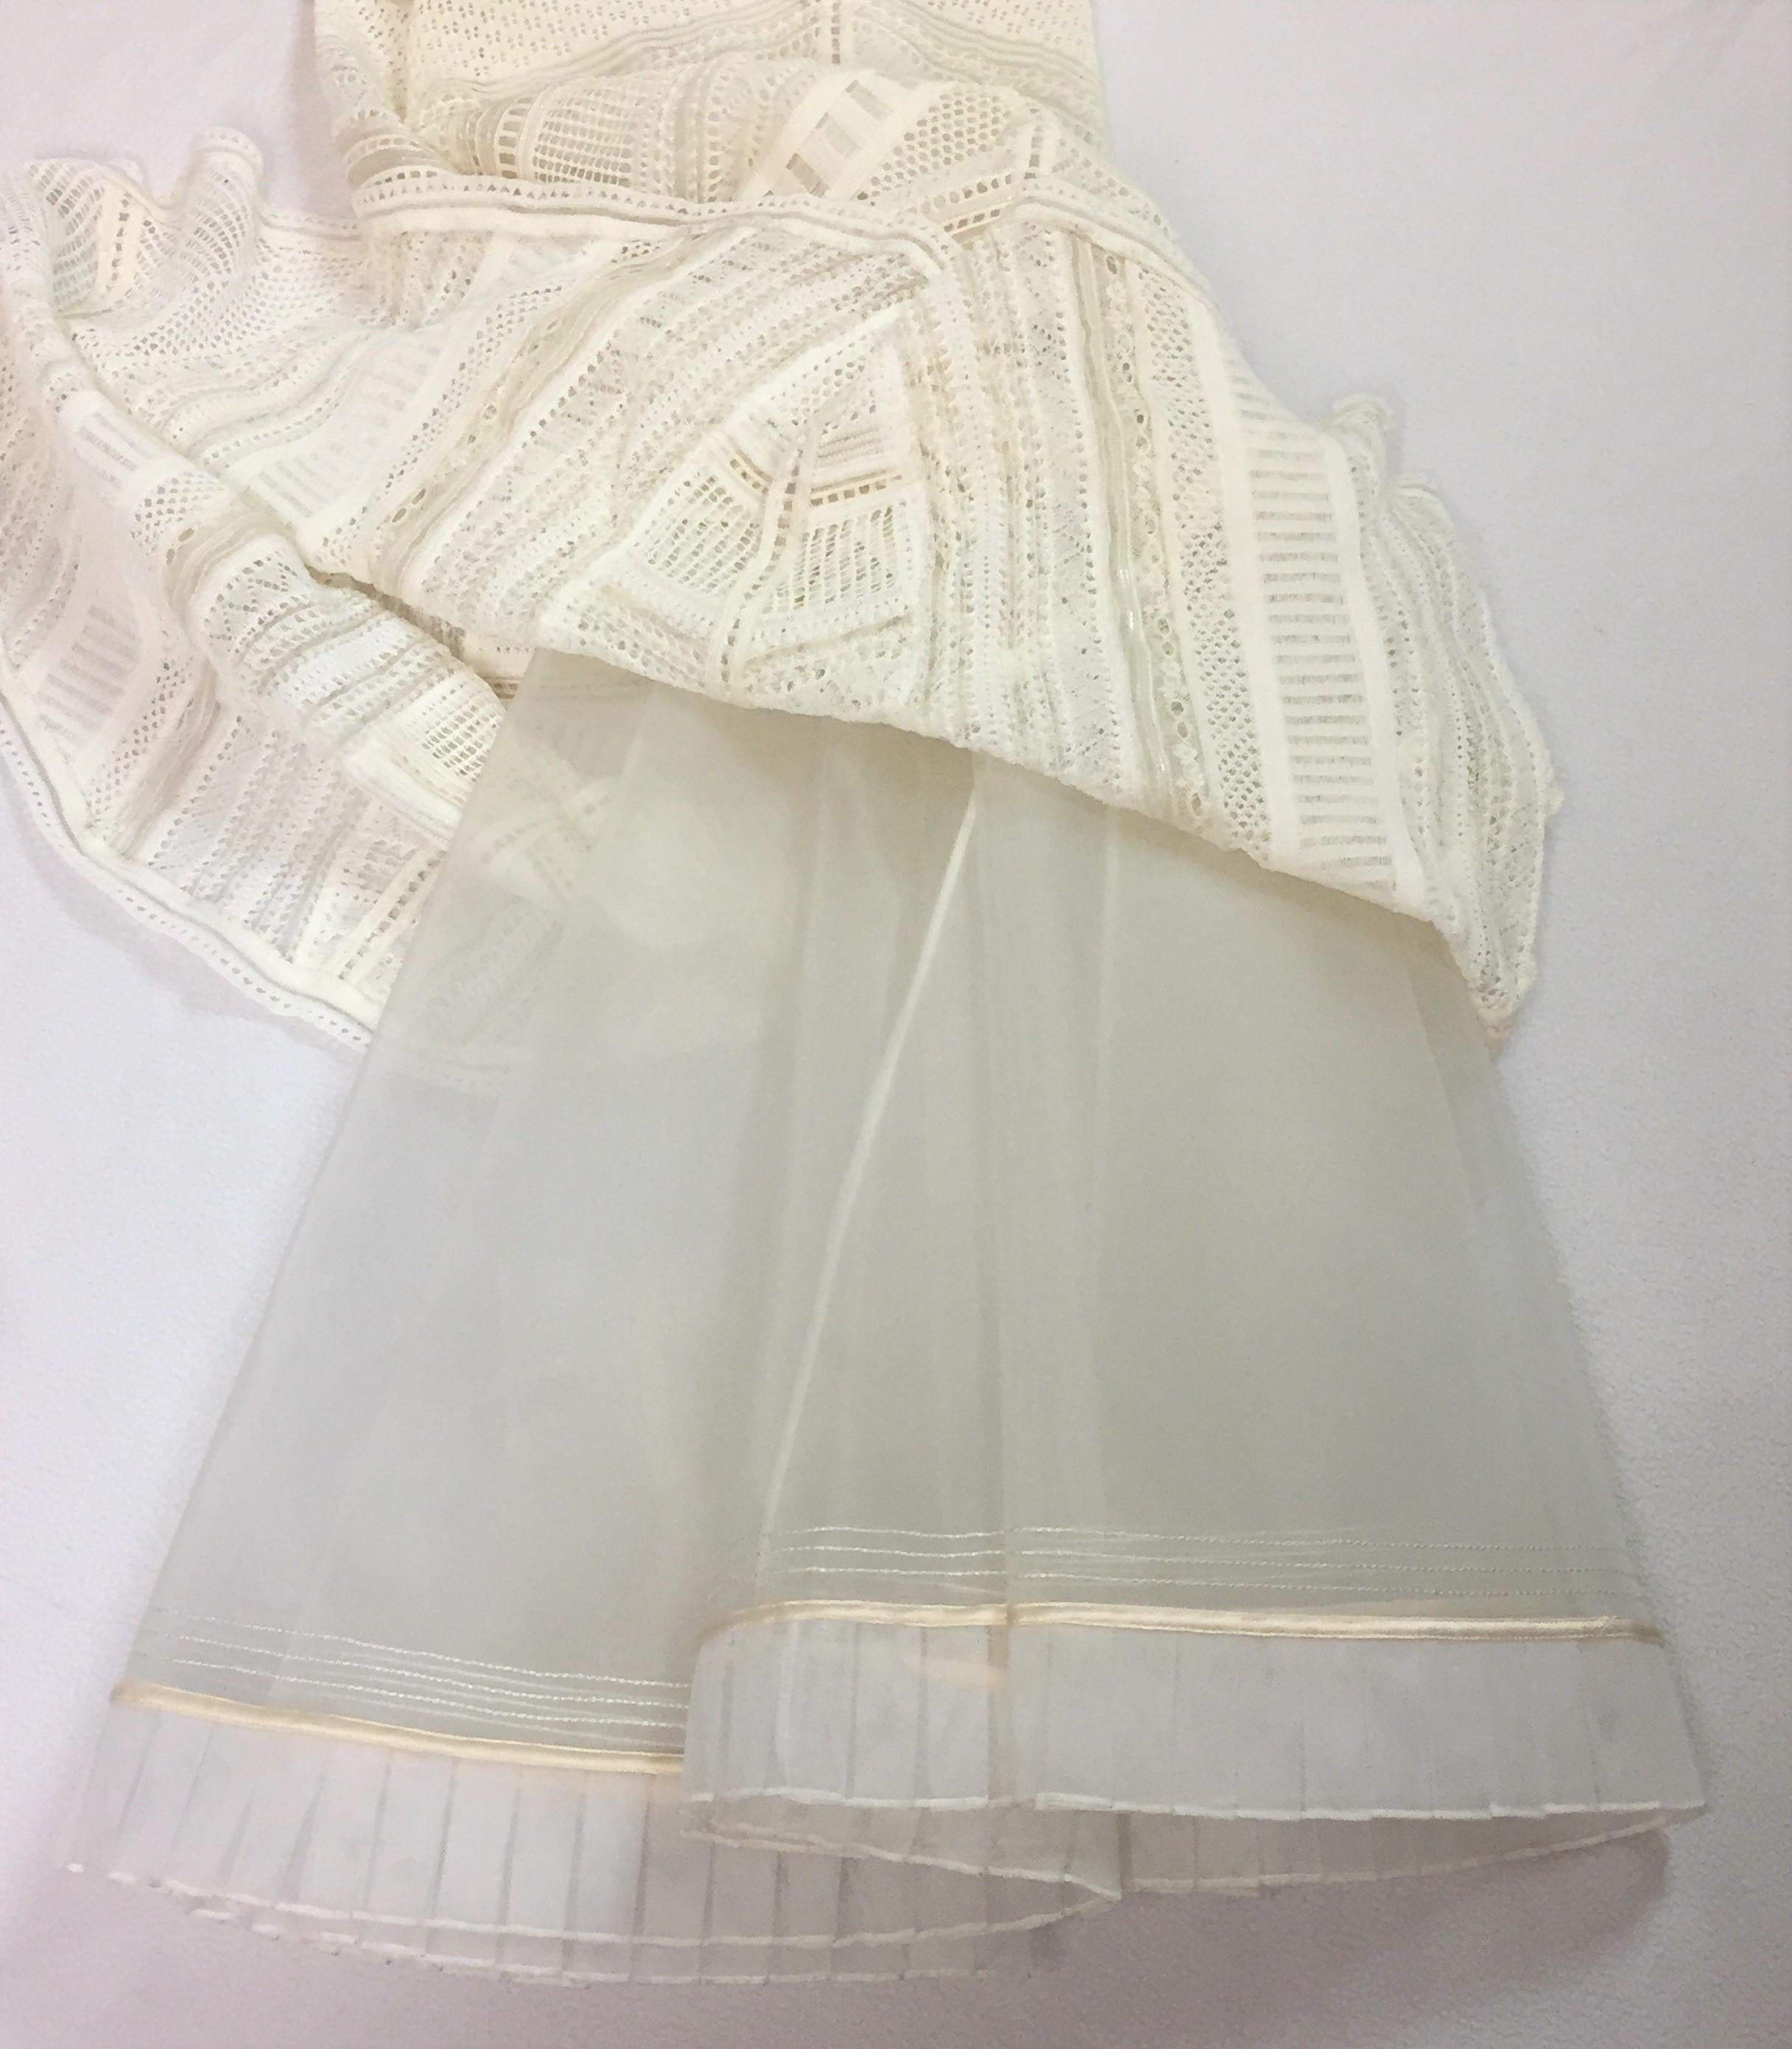 Gianfranco Ferre Sheer Ivory Knit Embellished Bridal Mermaid Gown Dress S/S 1998 3